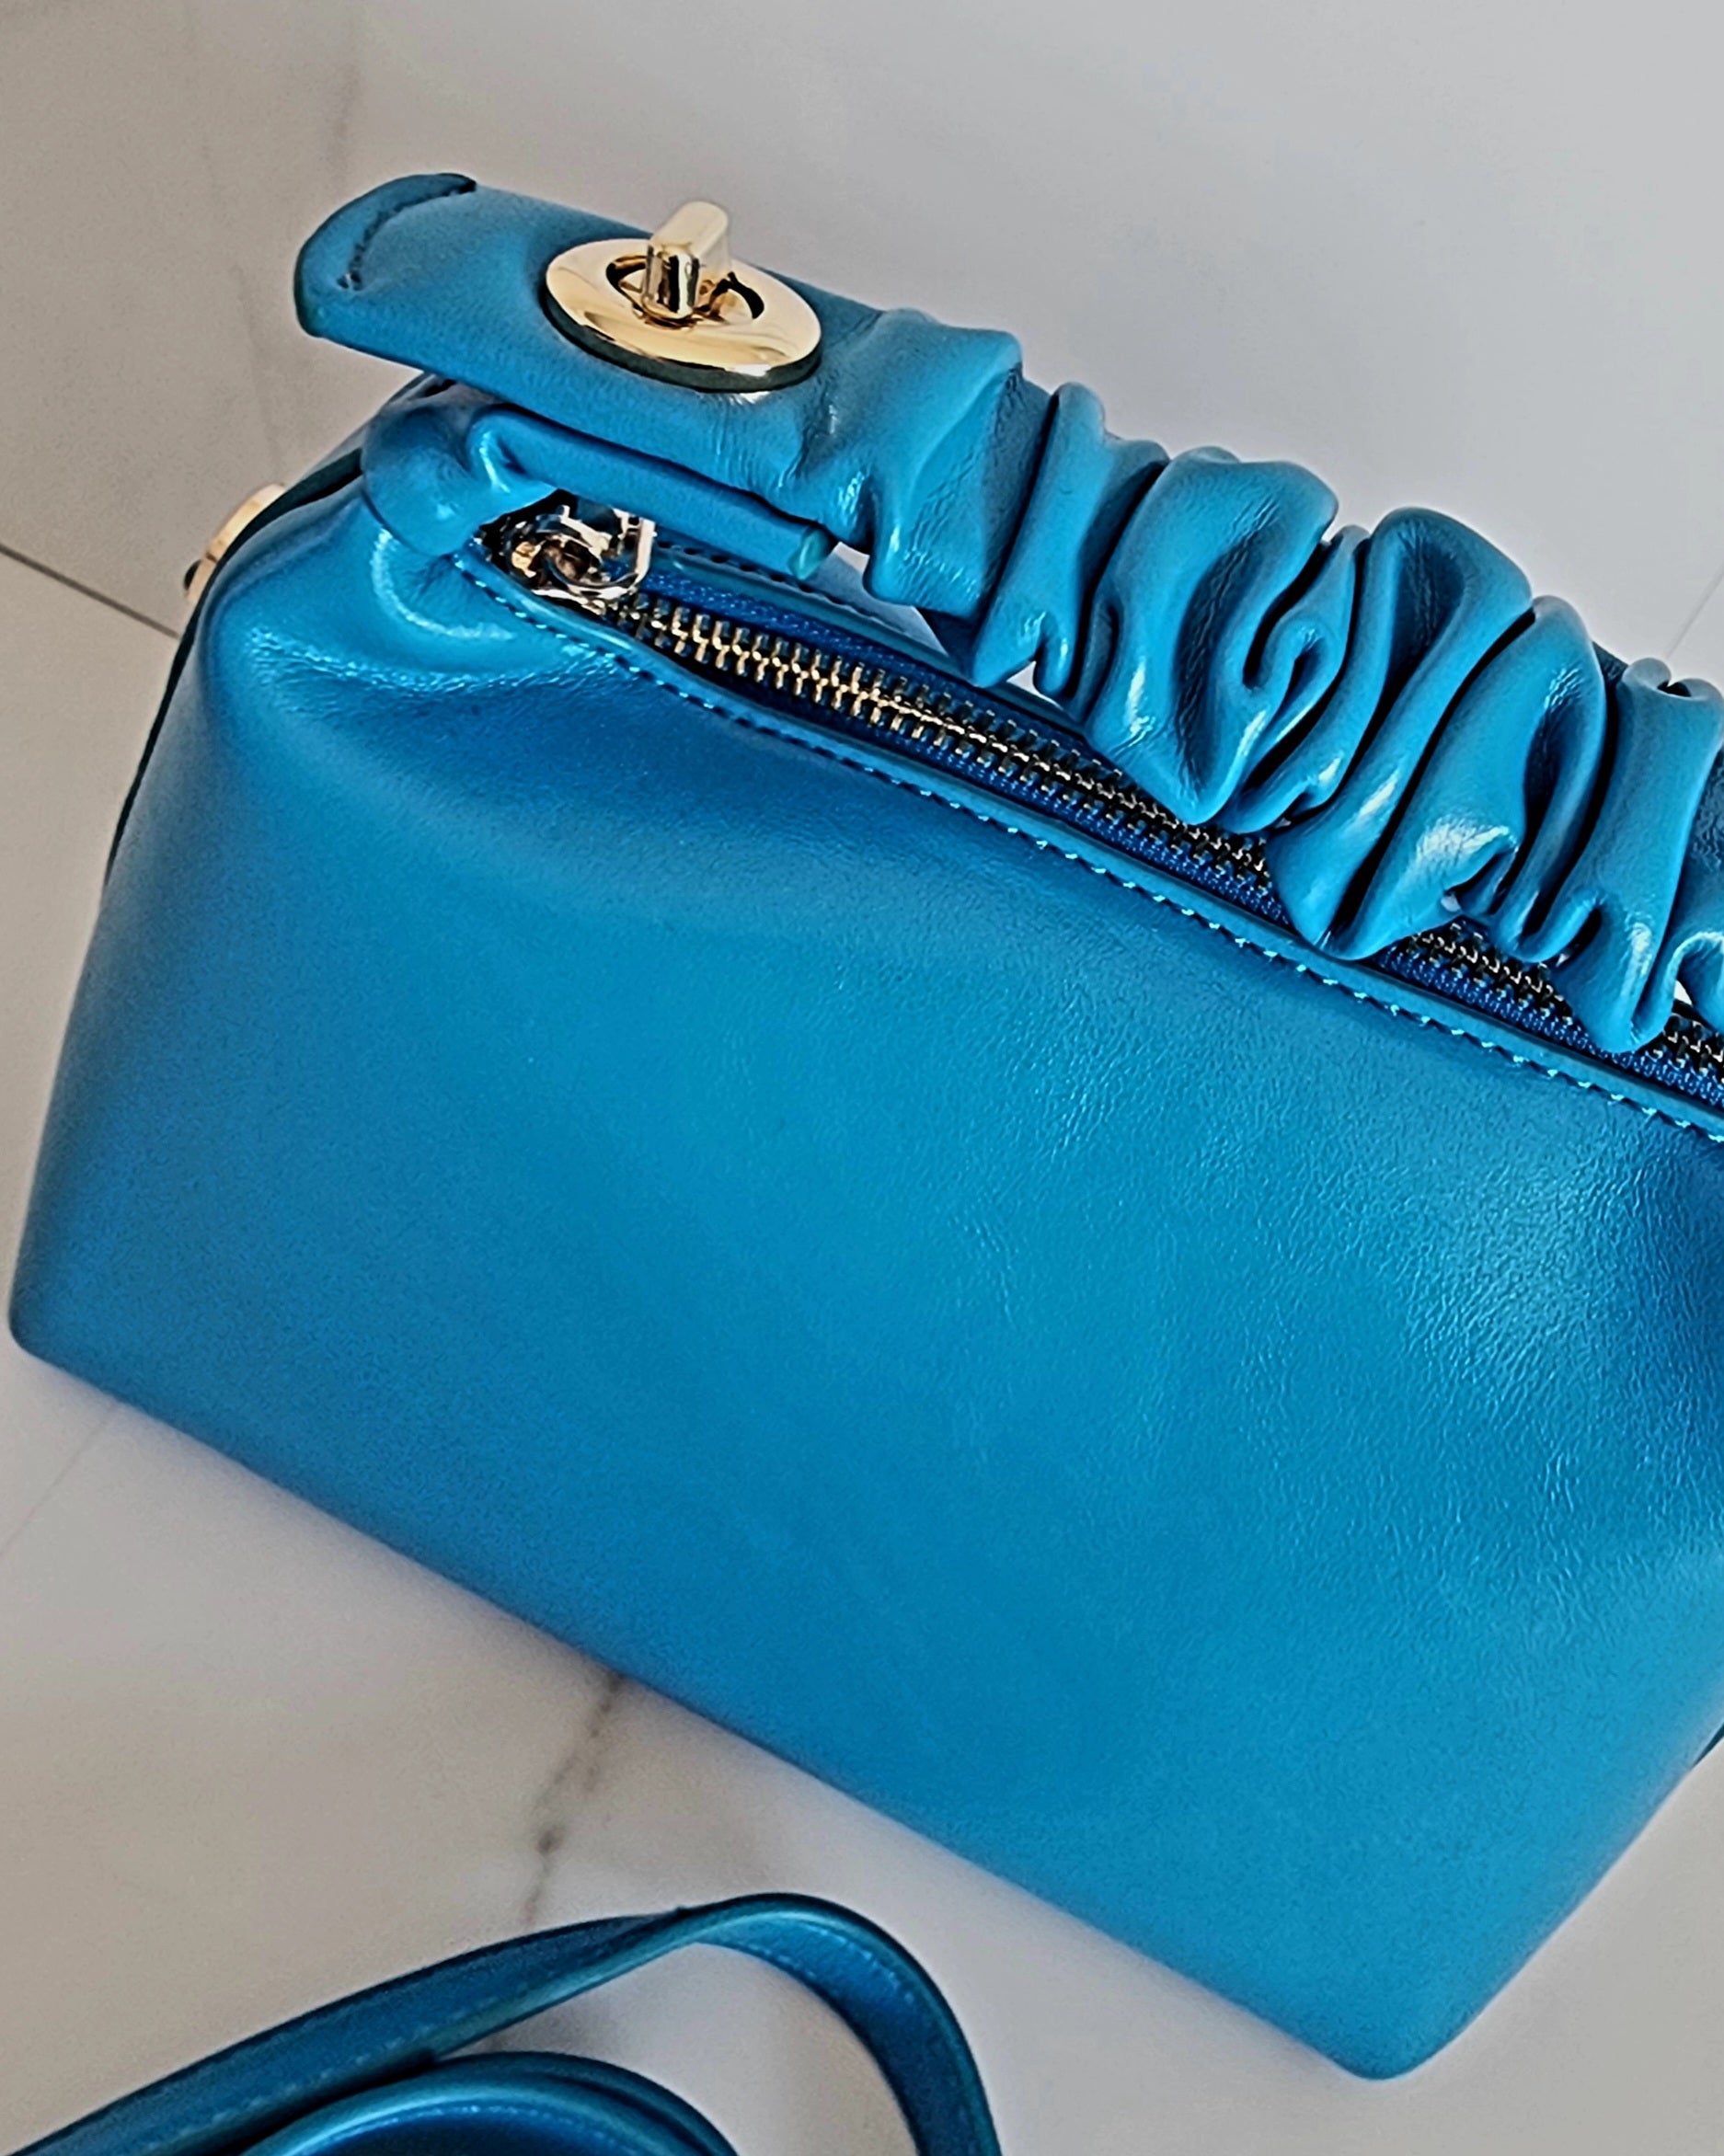 Rectangular handbag with soft curled handle and removable shoulder strap